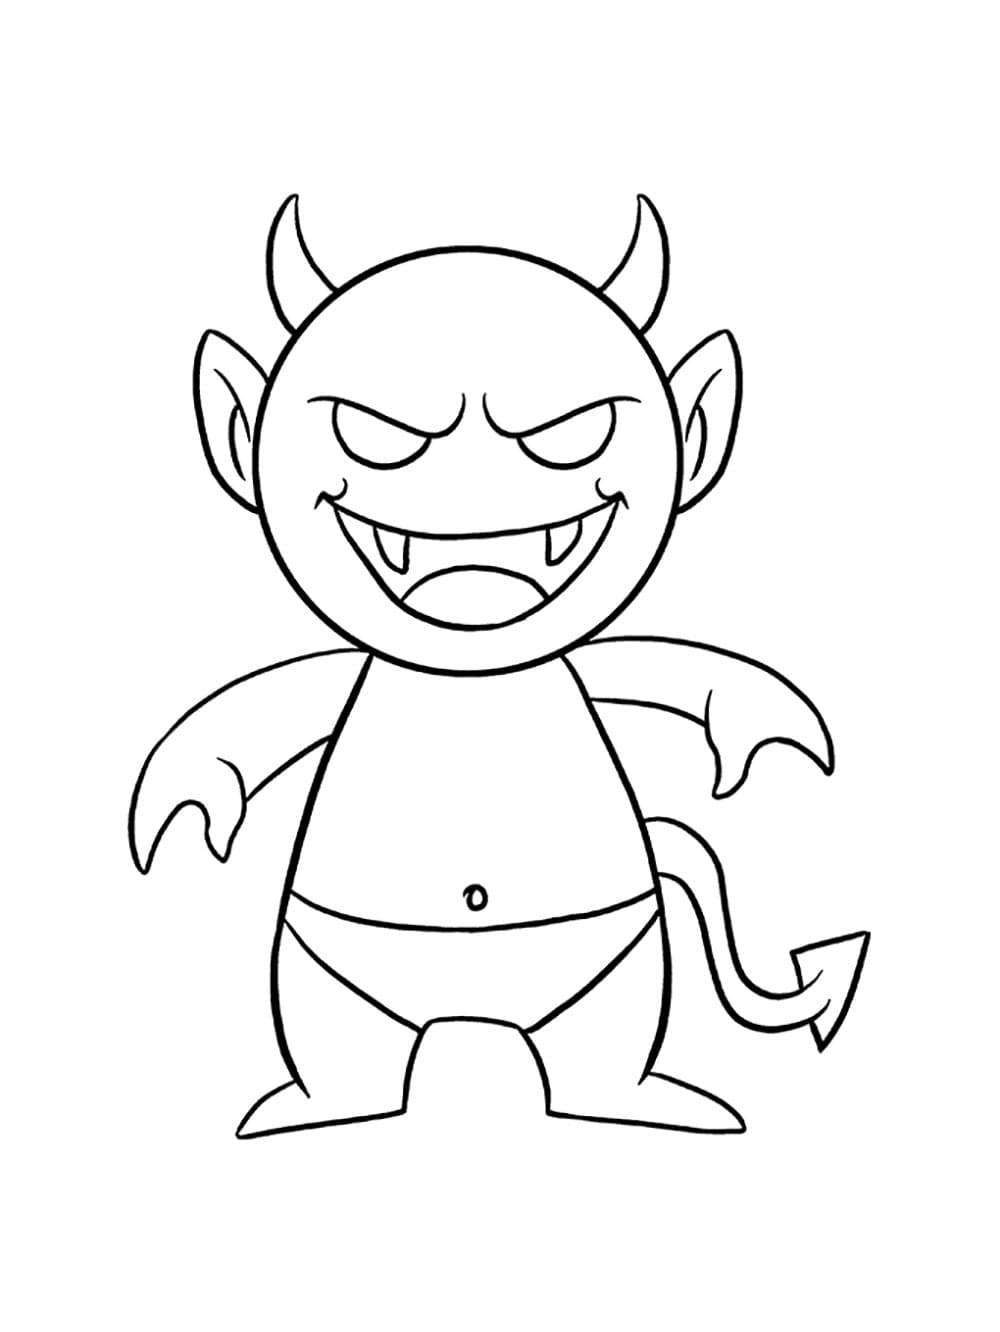 evil demon sketches